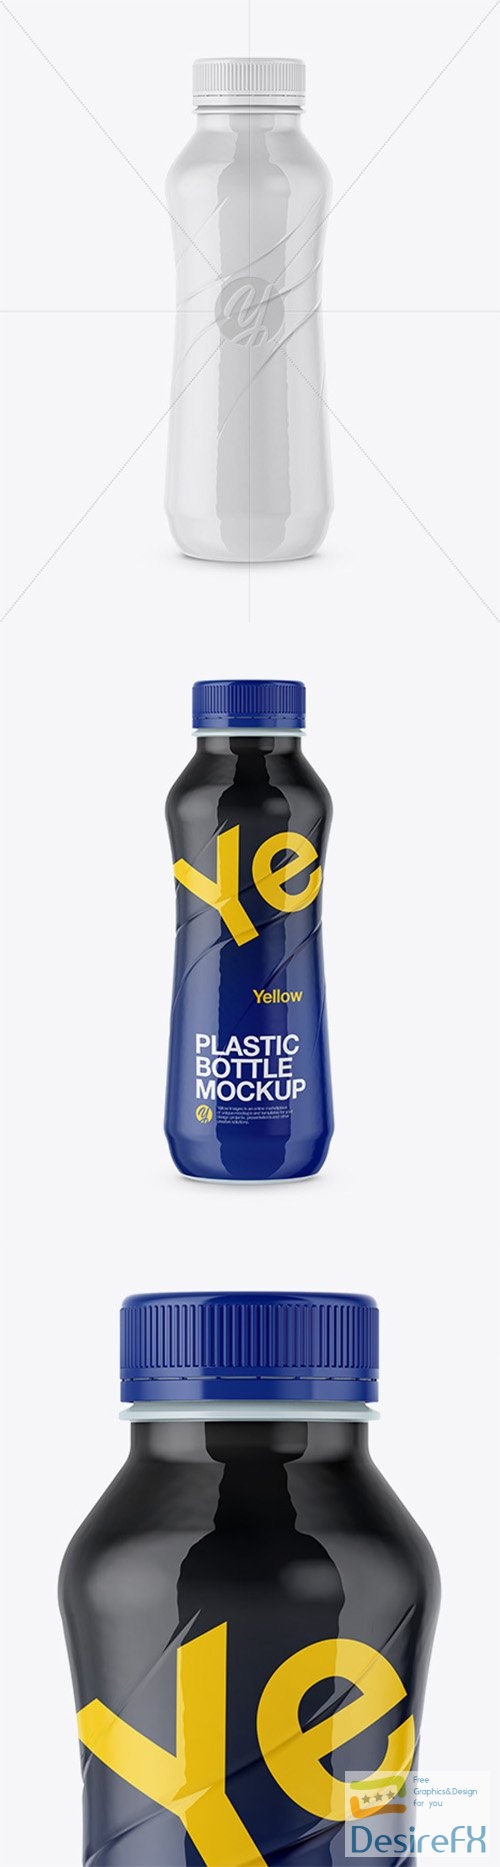 330ml Plastic Bottle in Shrink Sleeve Mockup 25649 TIF